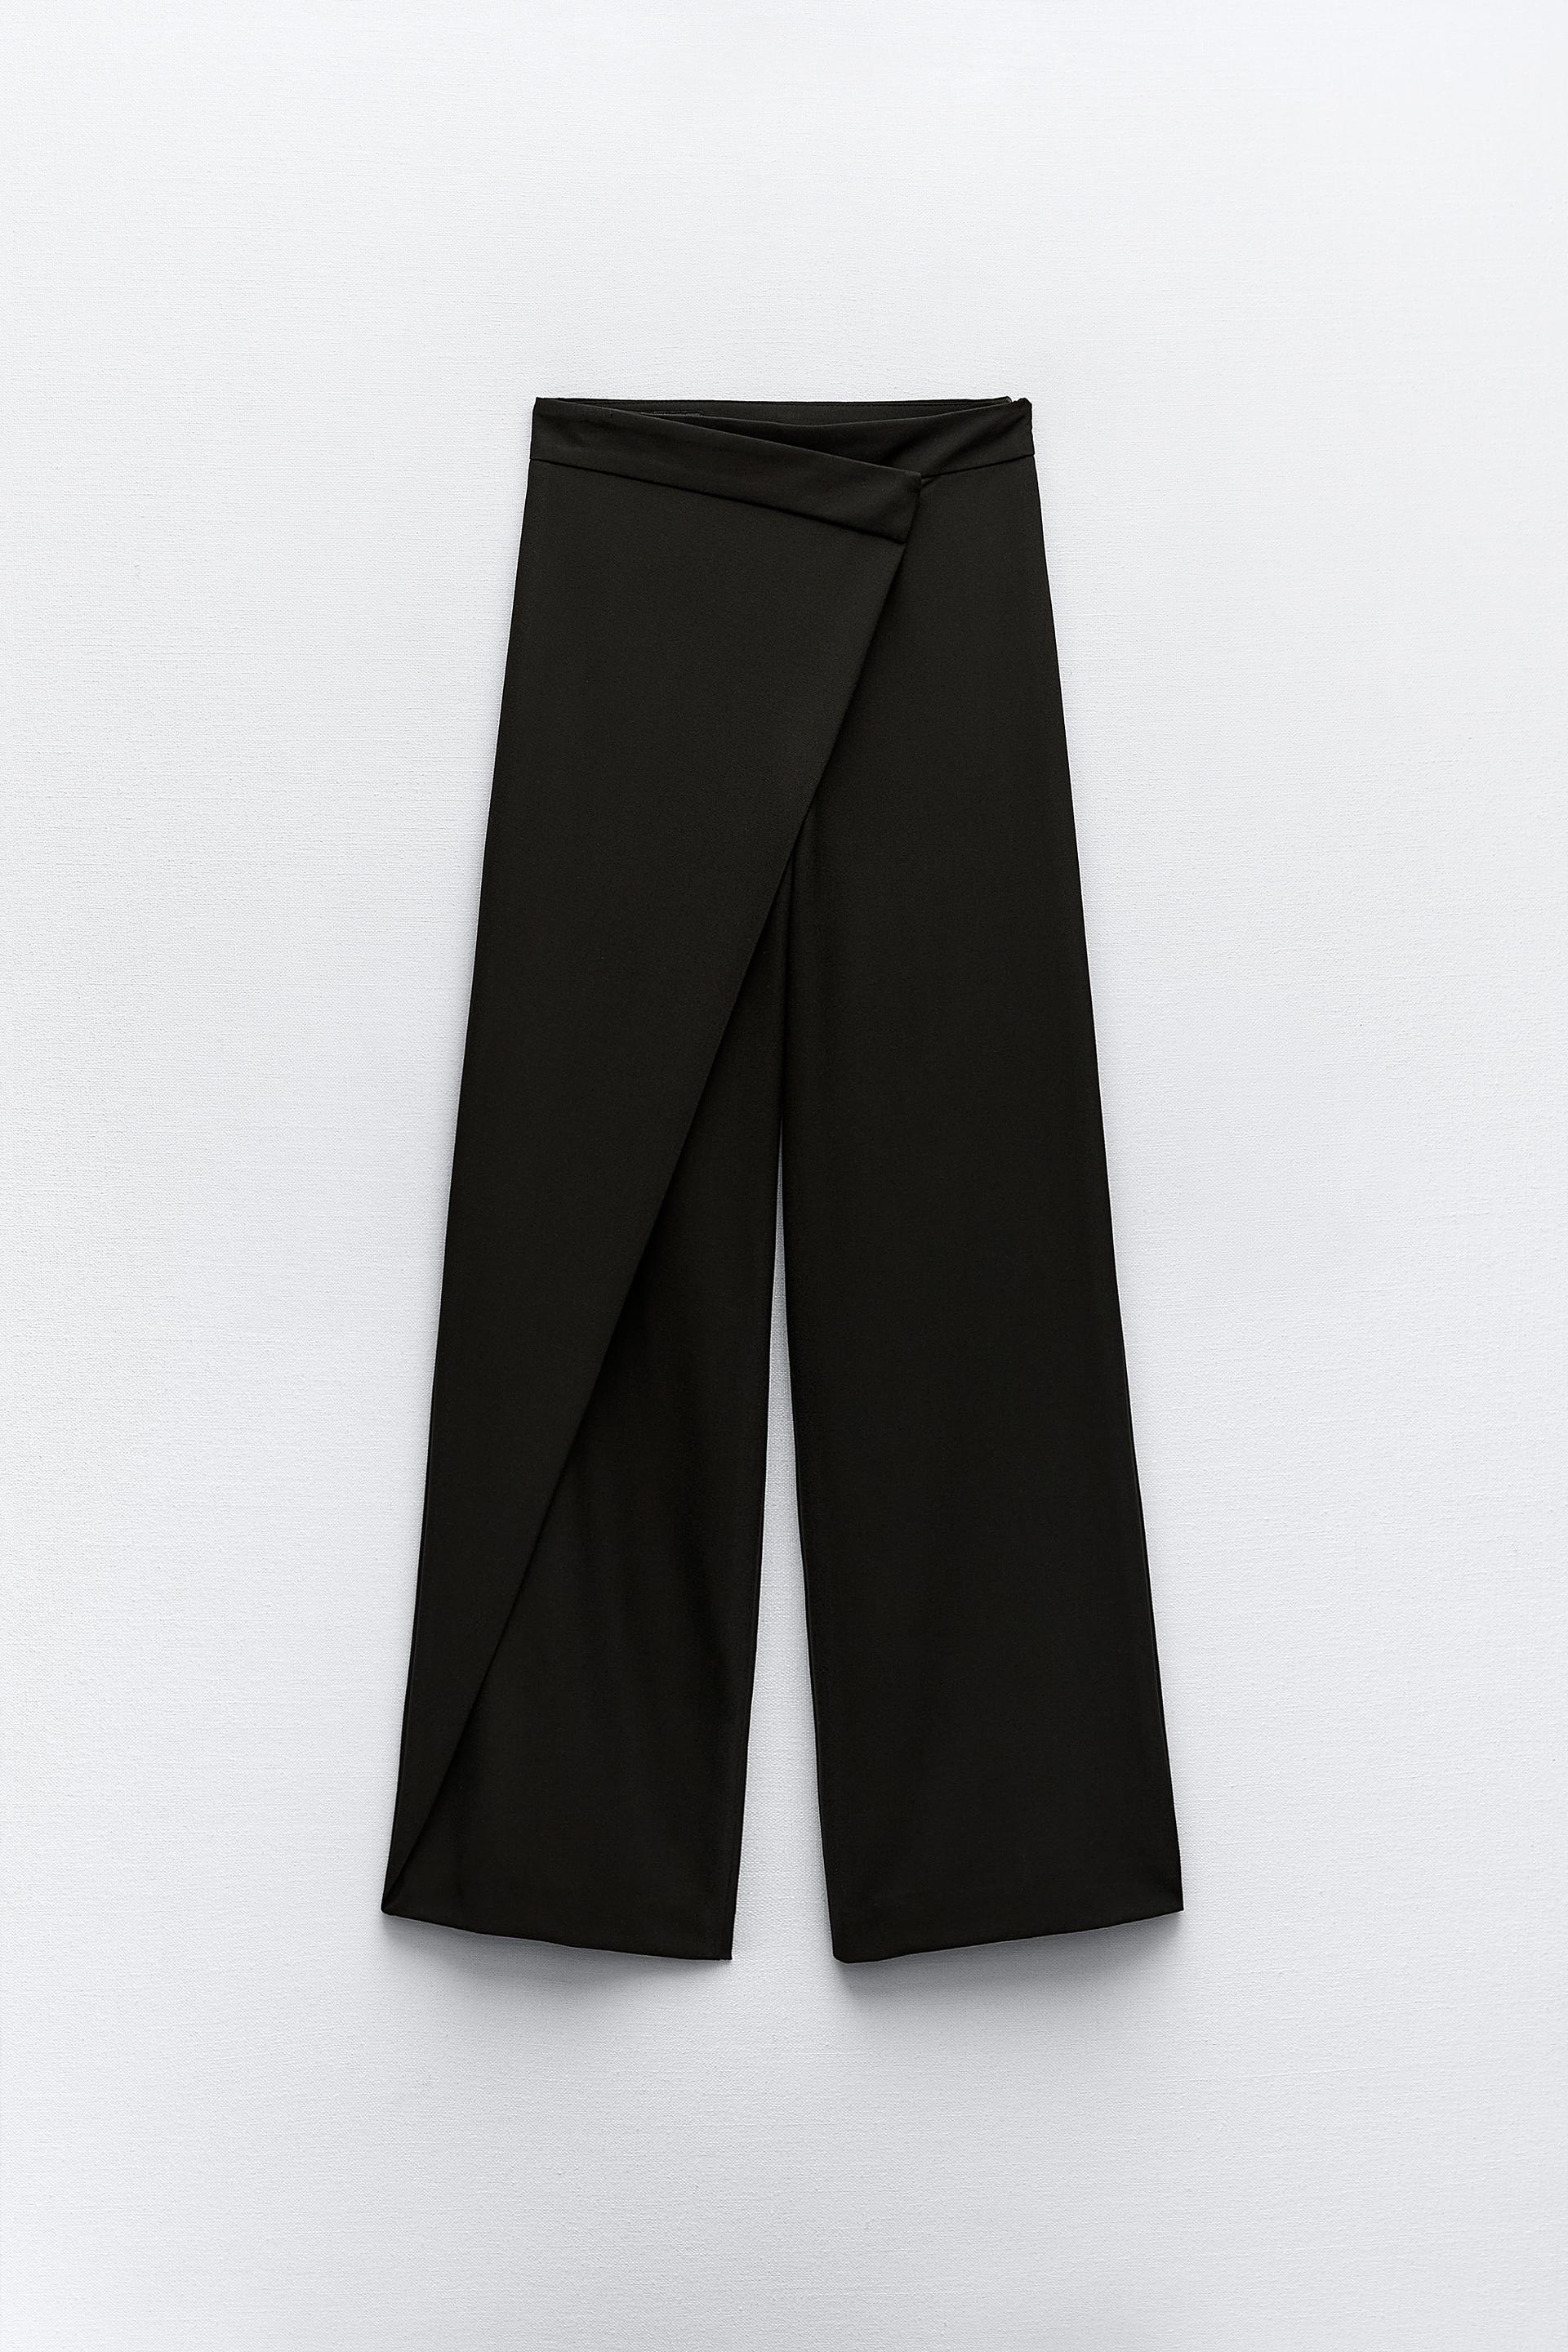 Zara High Waisted Trousers Pants size XXL